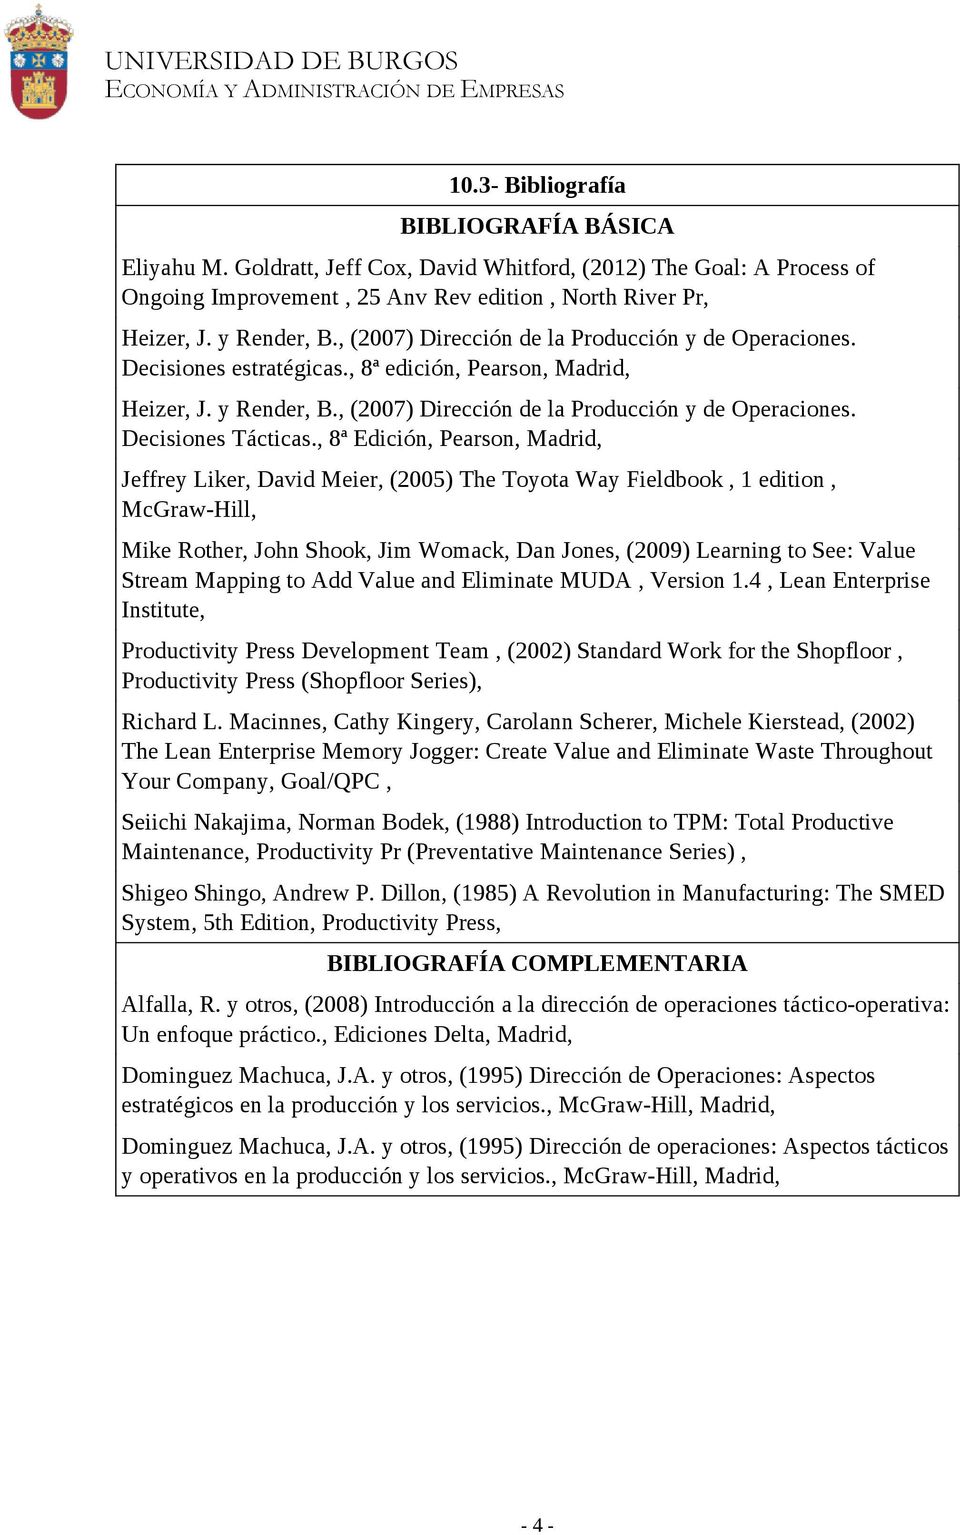 , 8ª Edición, Pearson, Madrid, Jeffrey Liker, David Meier, (2005) The Toyota Way Fieldbook, 1 edition, McGraw-Hill, Mike Rother, John Shook, Jim Womack, Dan Jones, (2009) Learning to See: Value